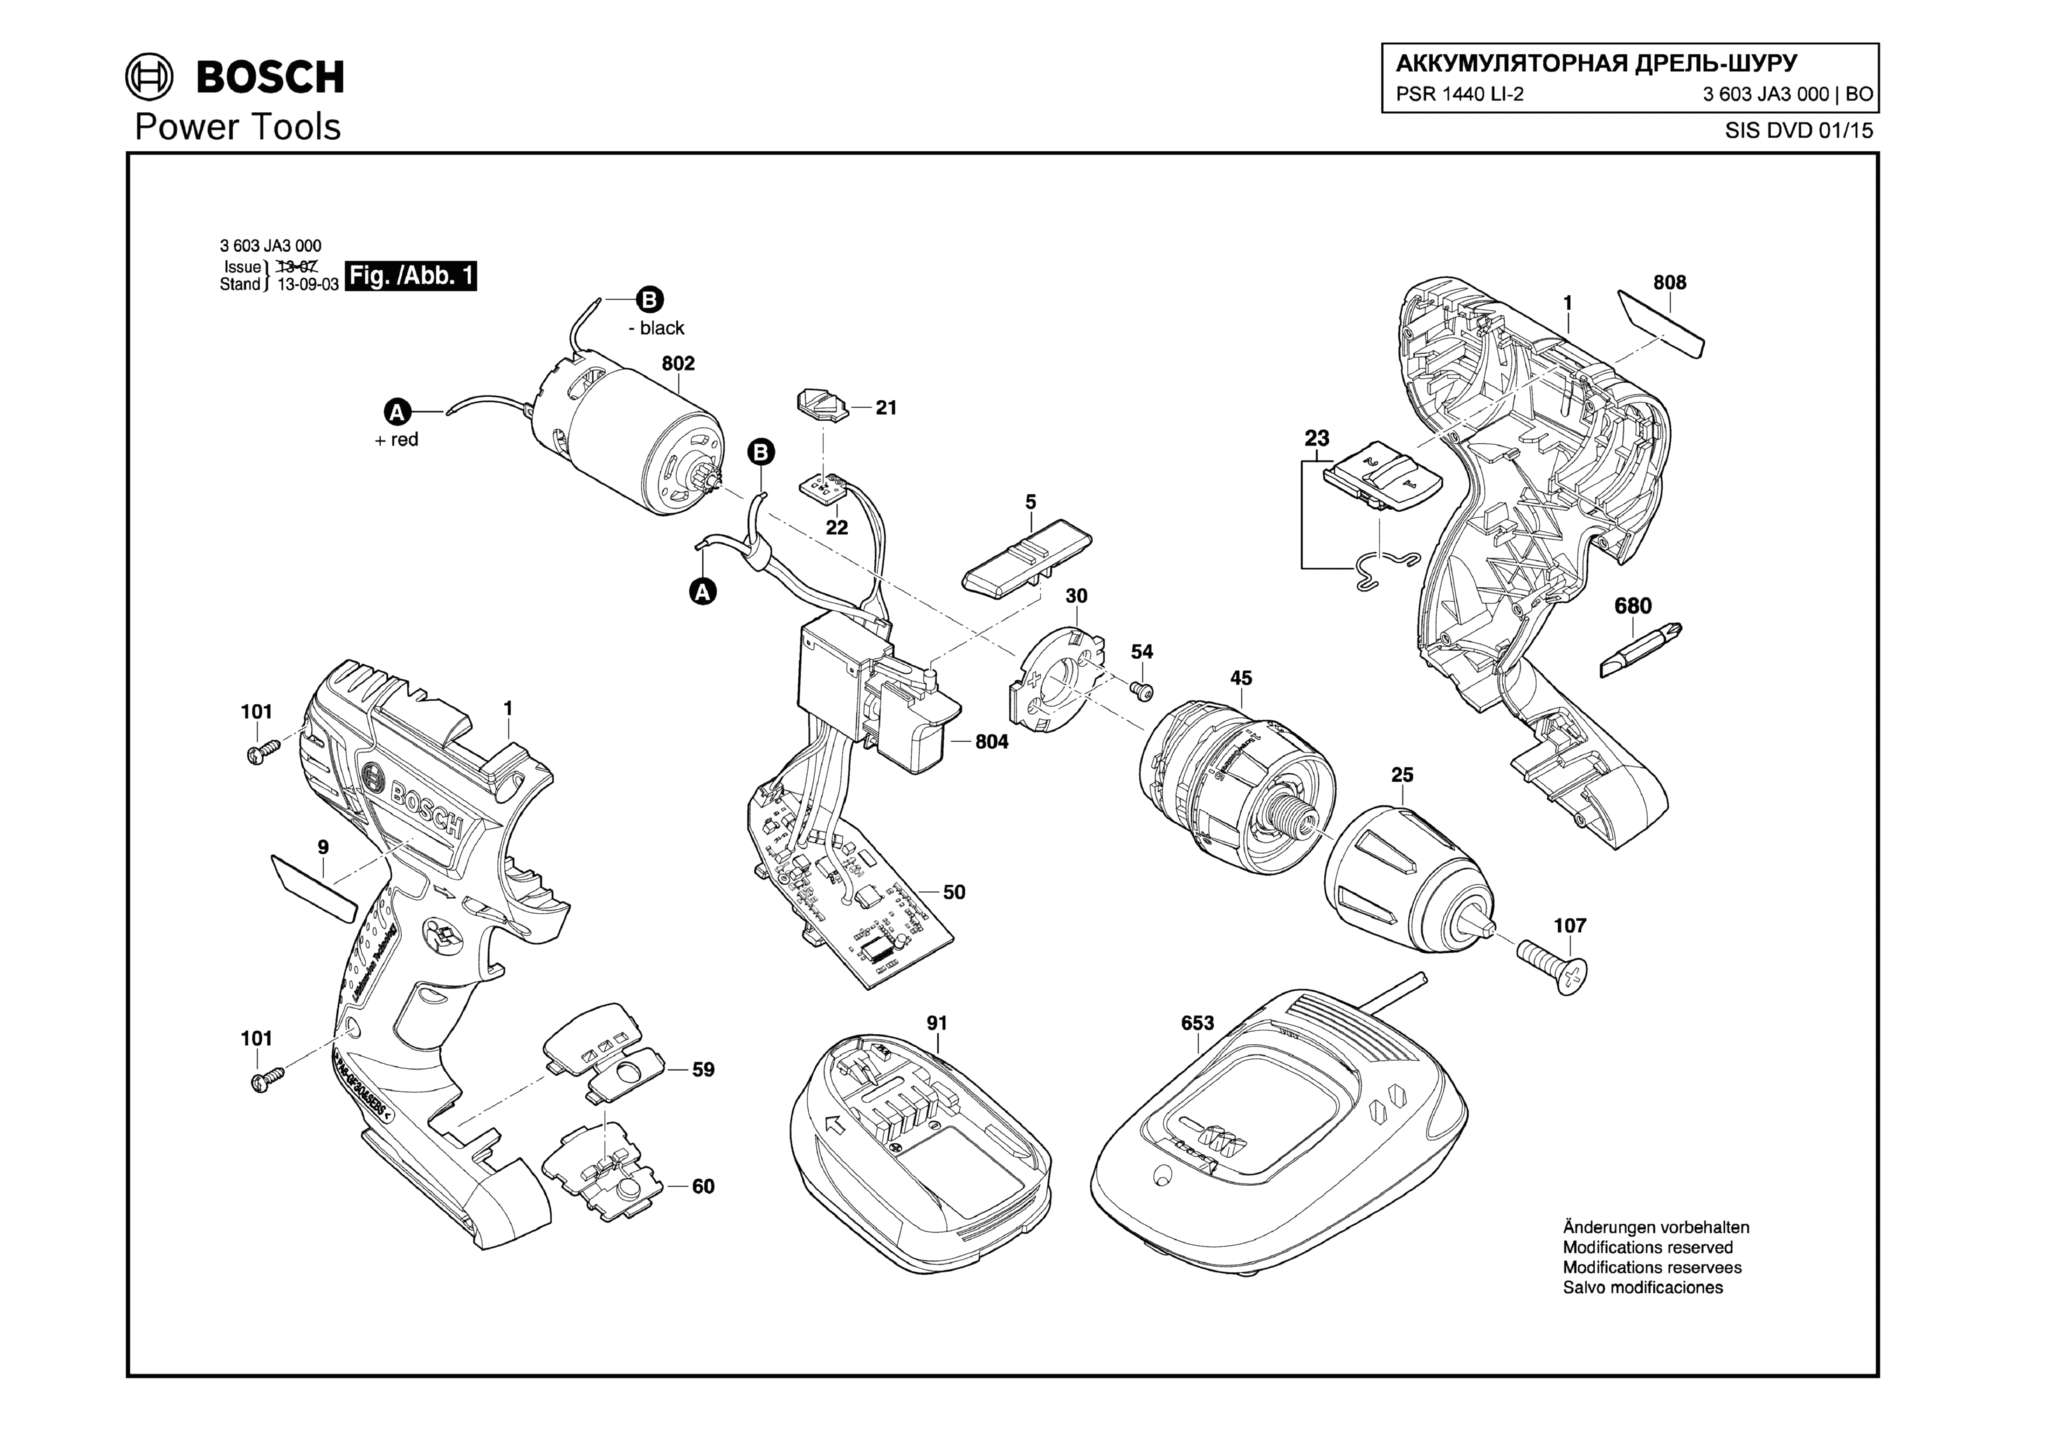 Запчасти, схема и деталировка Bosch PSR 1440 LI-2 (ТИП 3603JA3000)